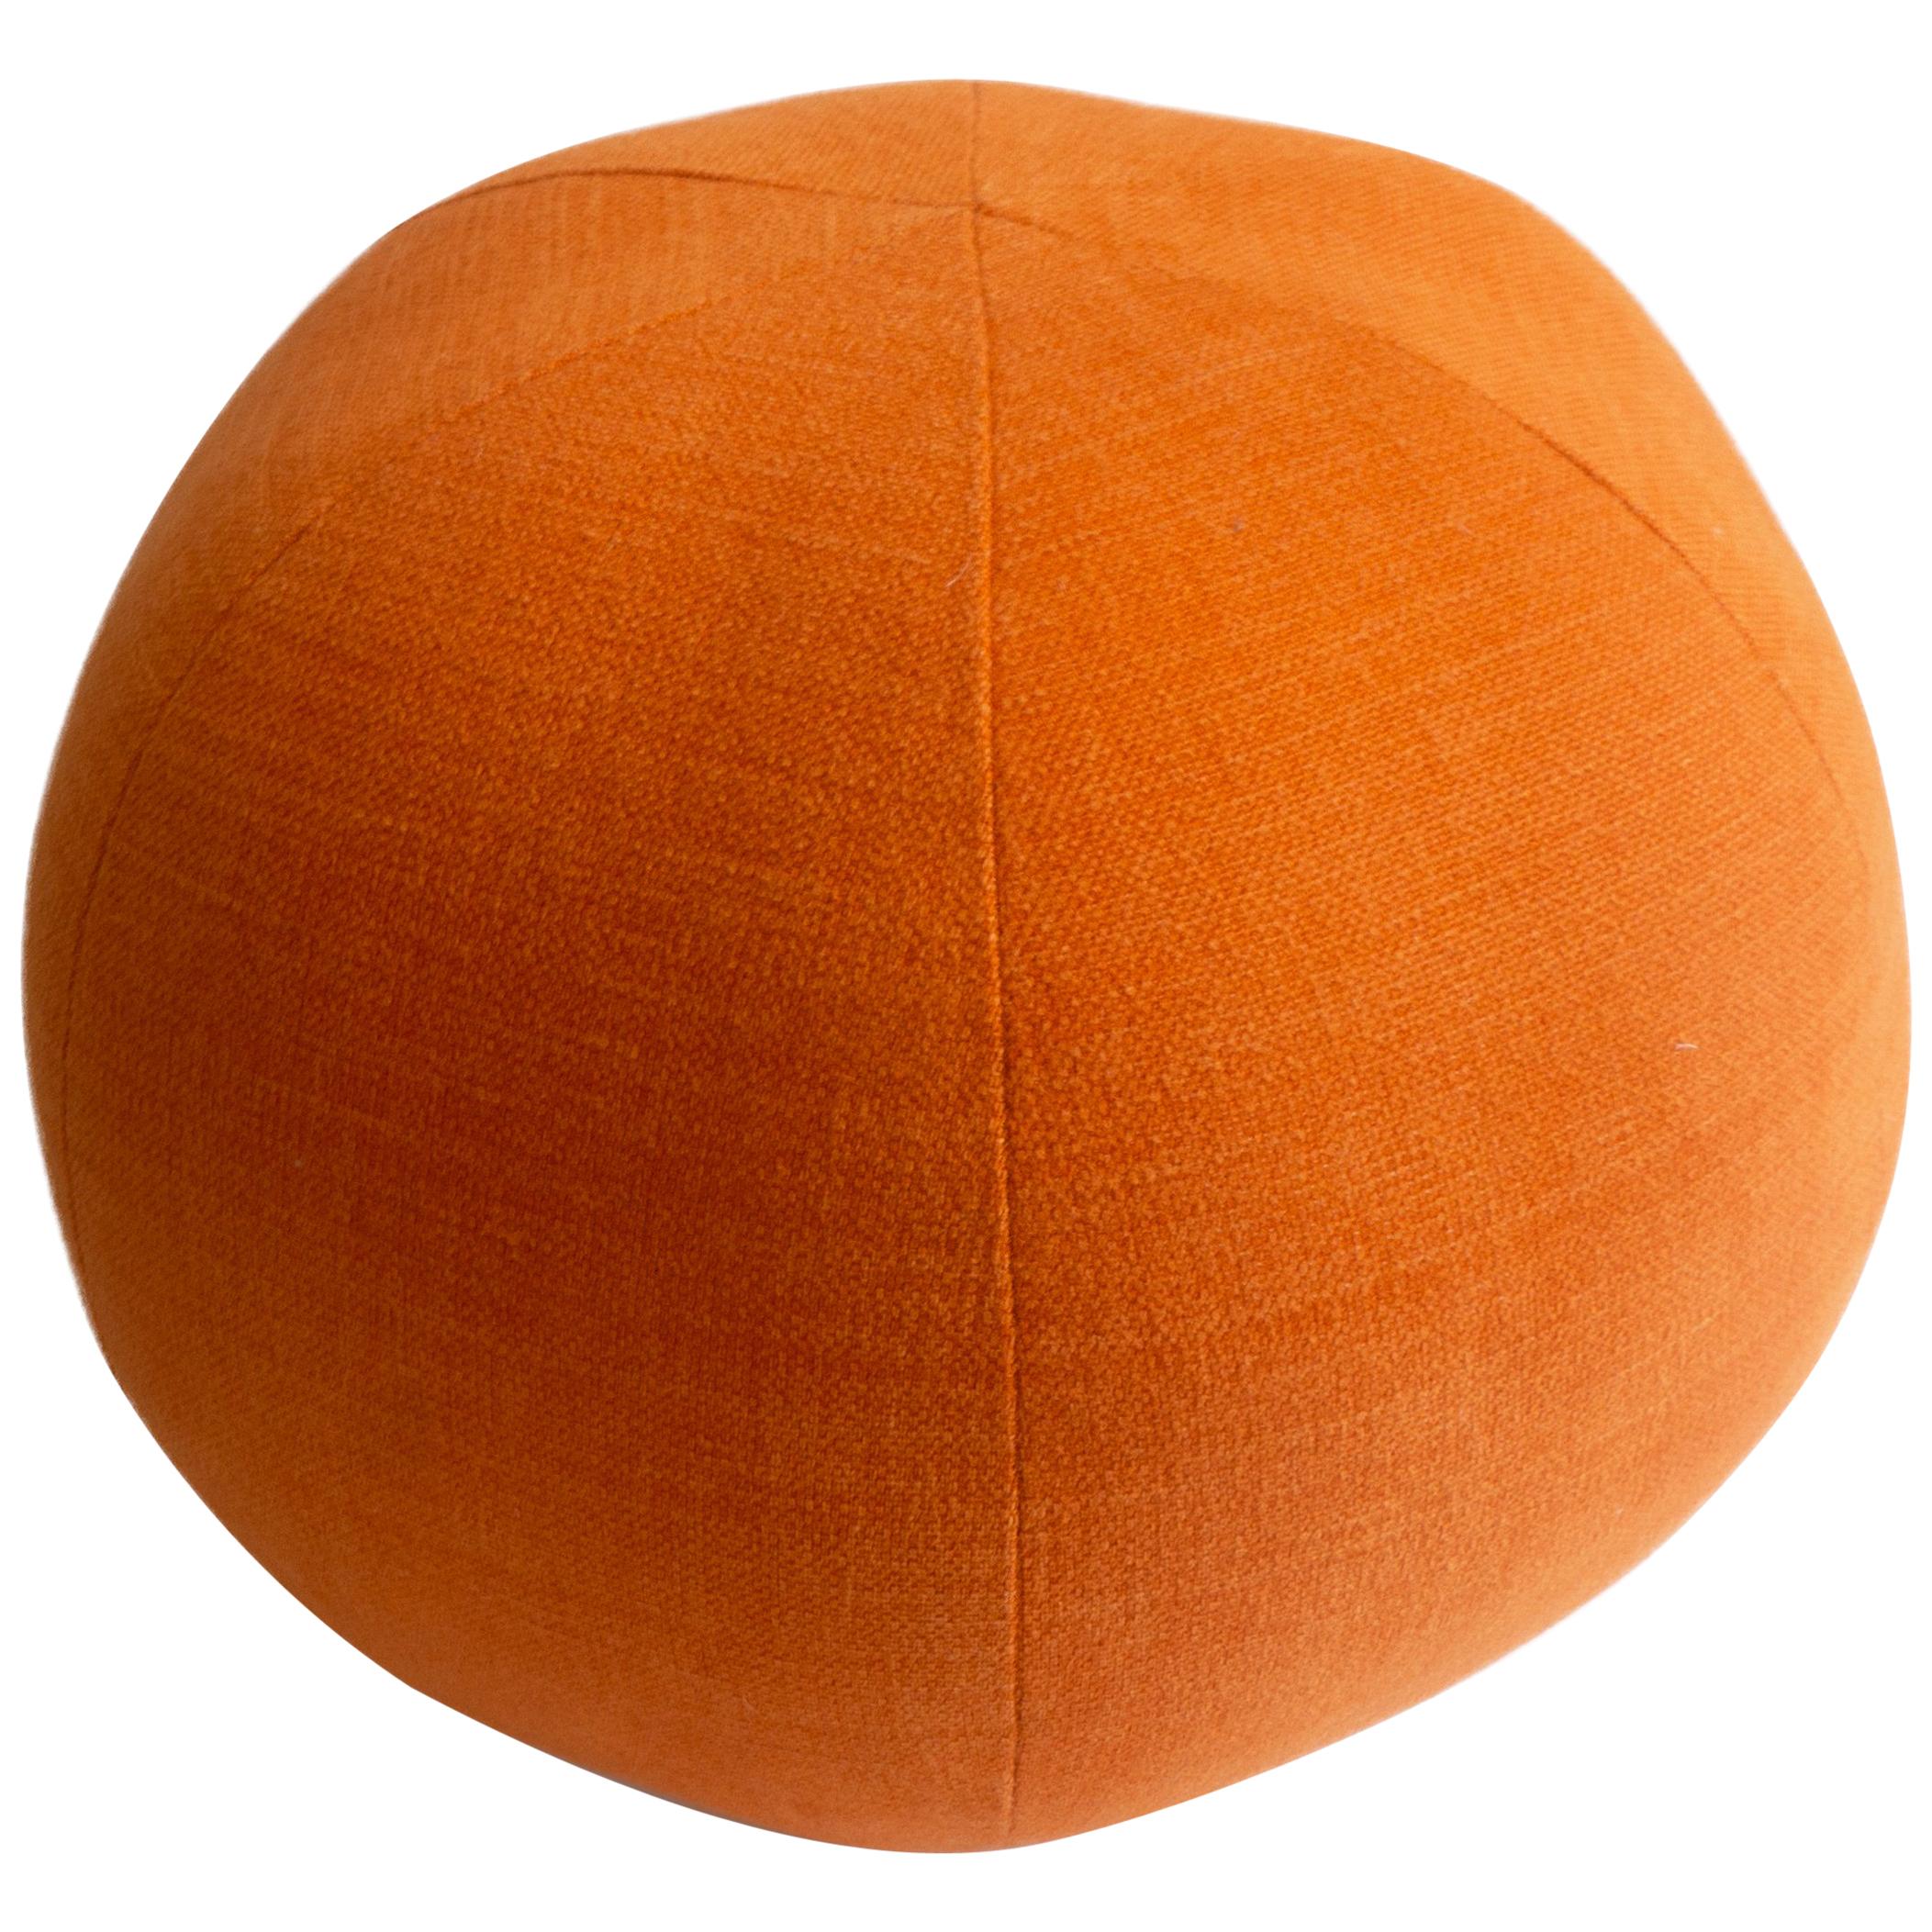 Round Ball Pillow in Orange Fabric